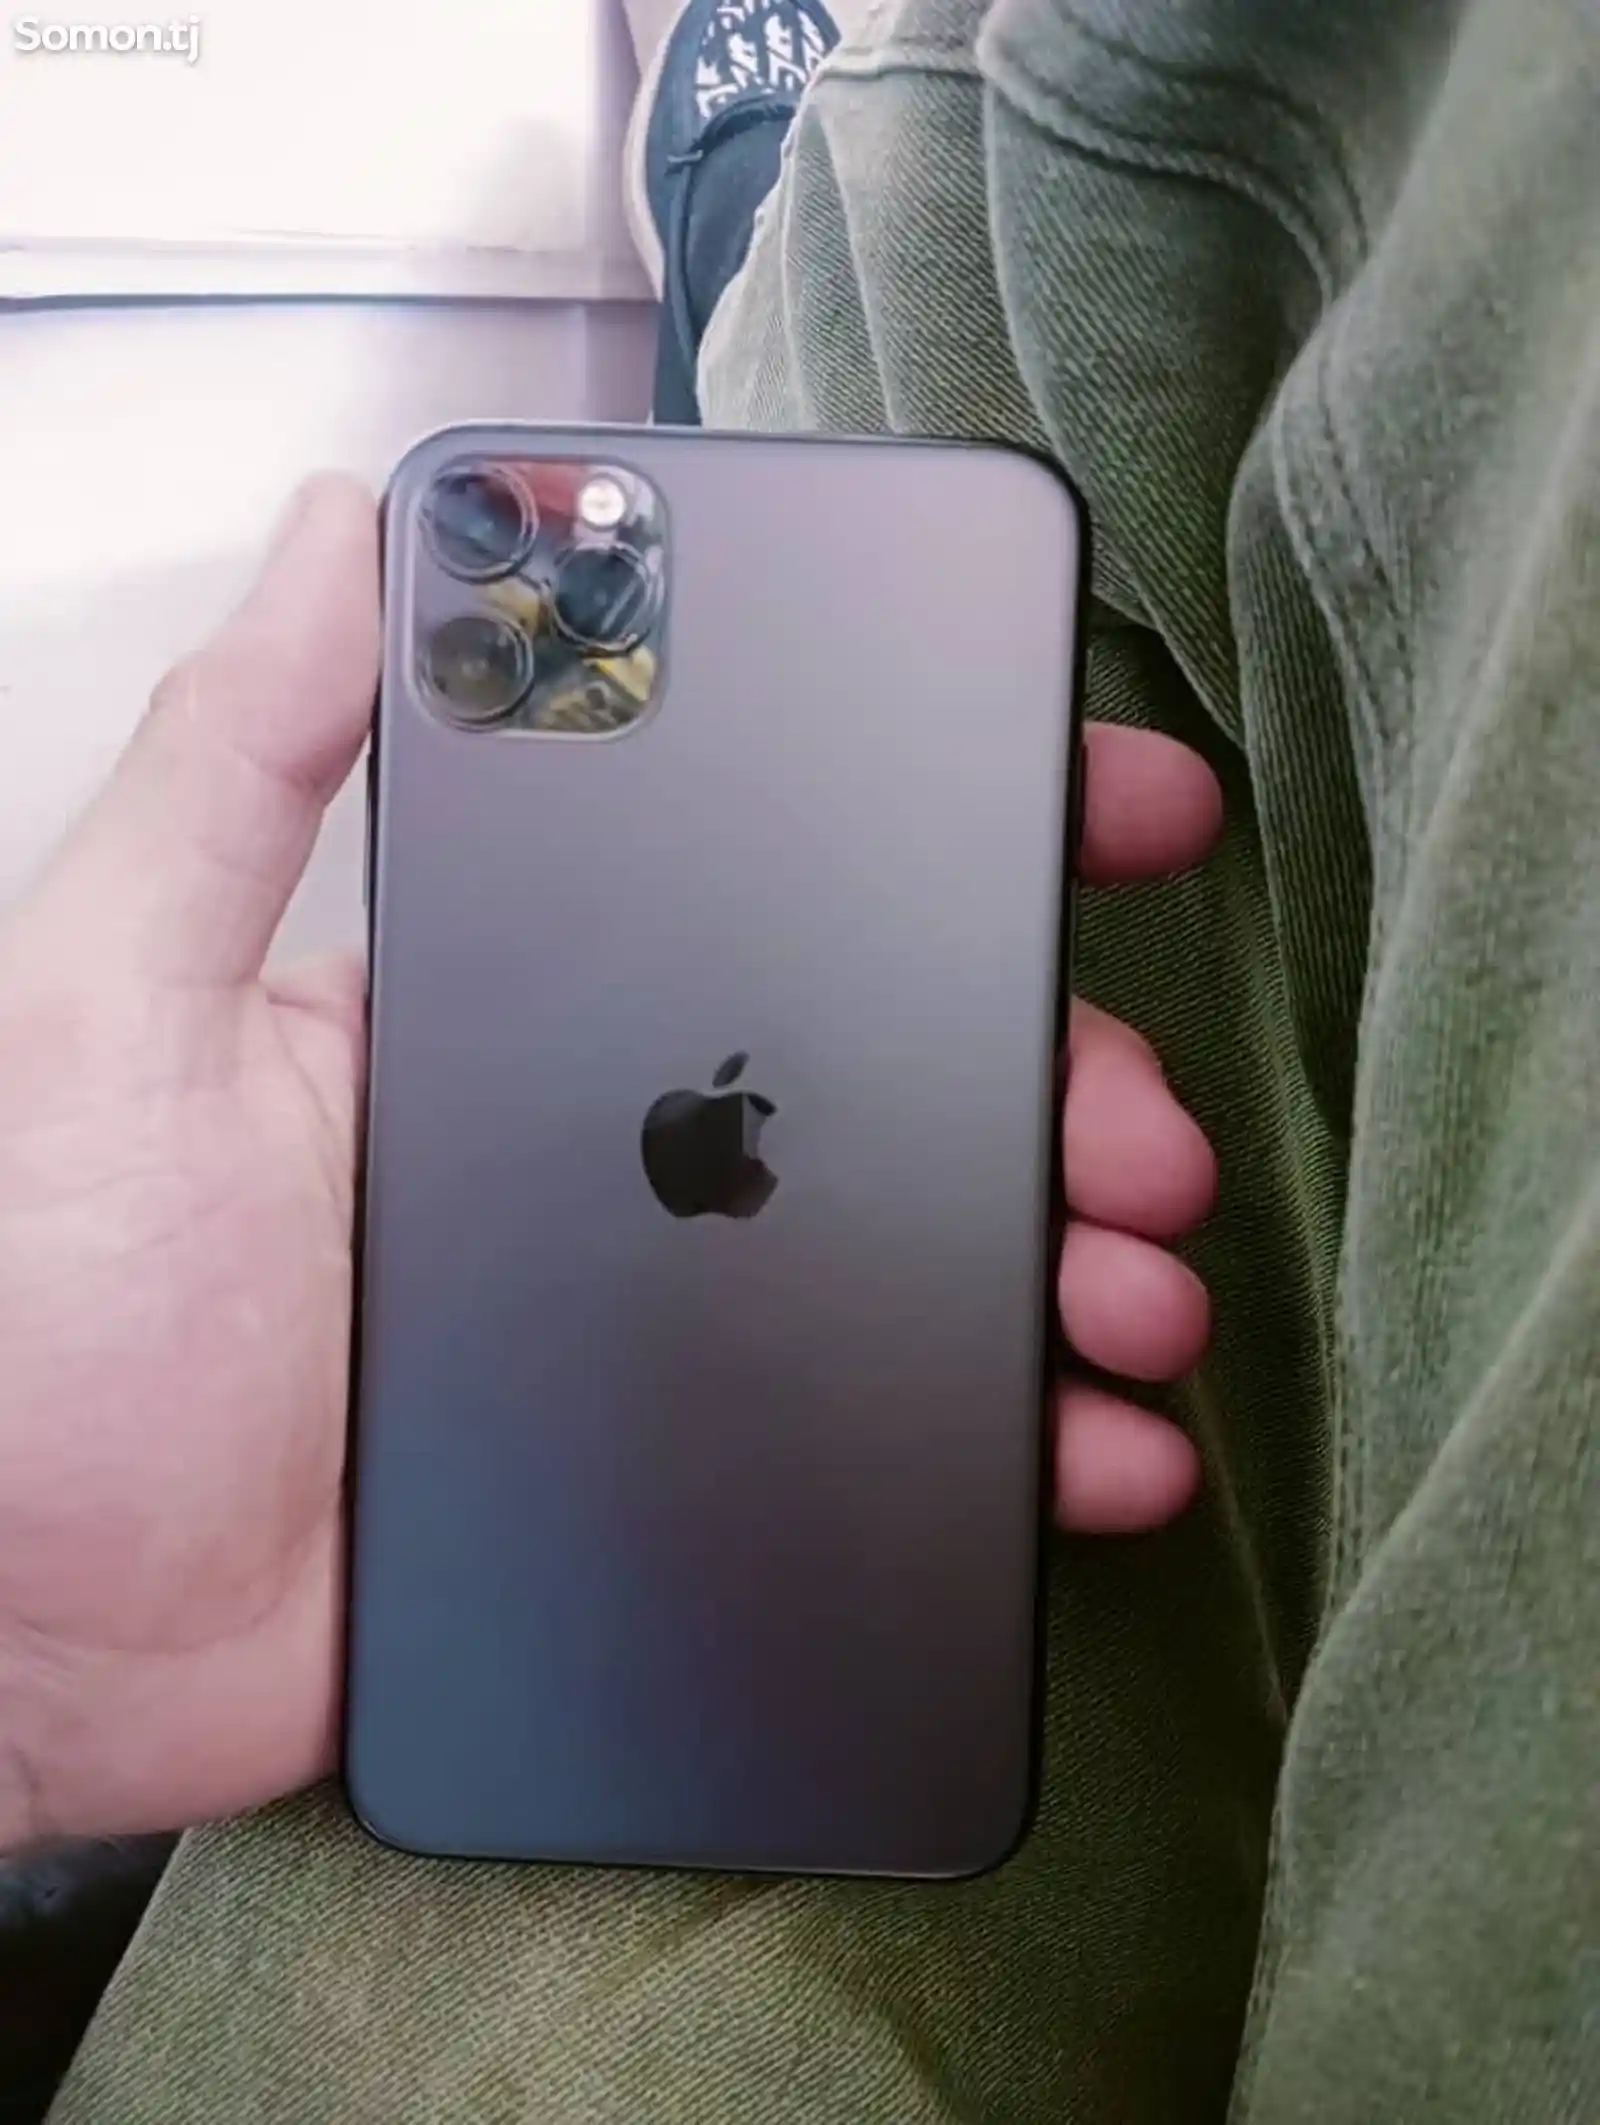 Apple iPhone 11 Pro Max, 256 gb, Silver-1